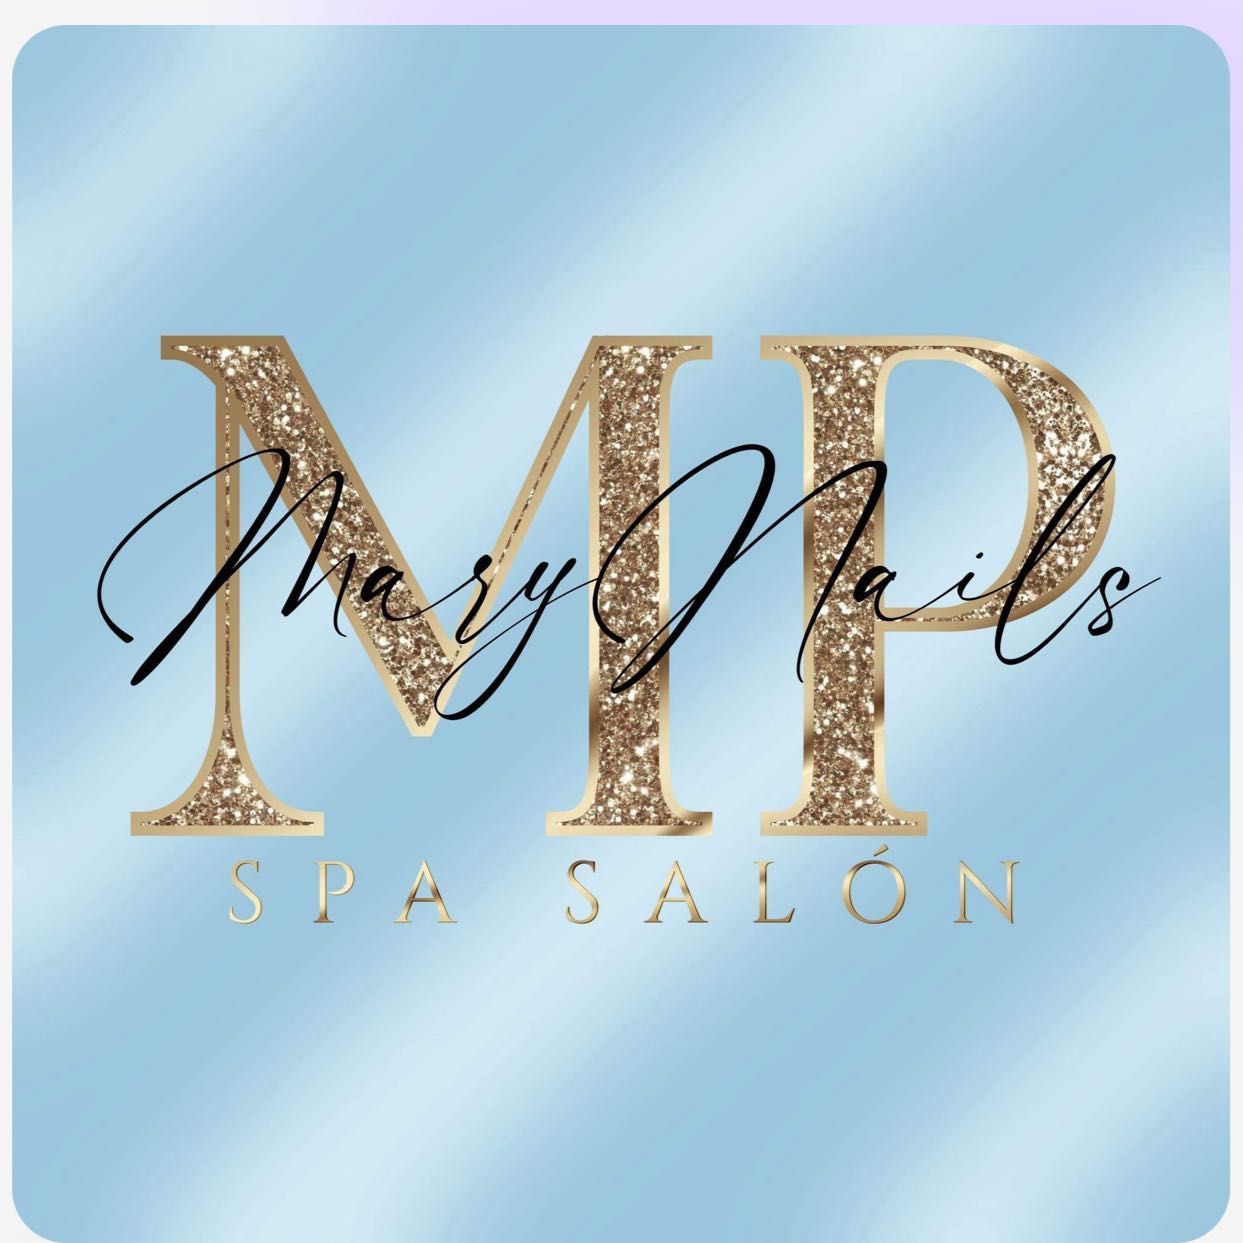 Mary Nails Spa Salon, South orange blossom trail, 12939, Orlando, 32837